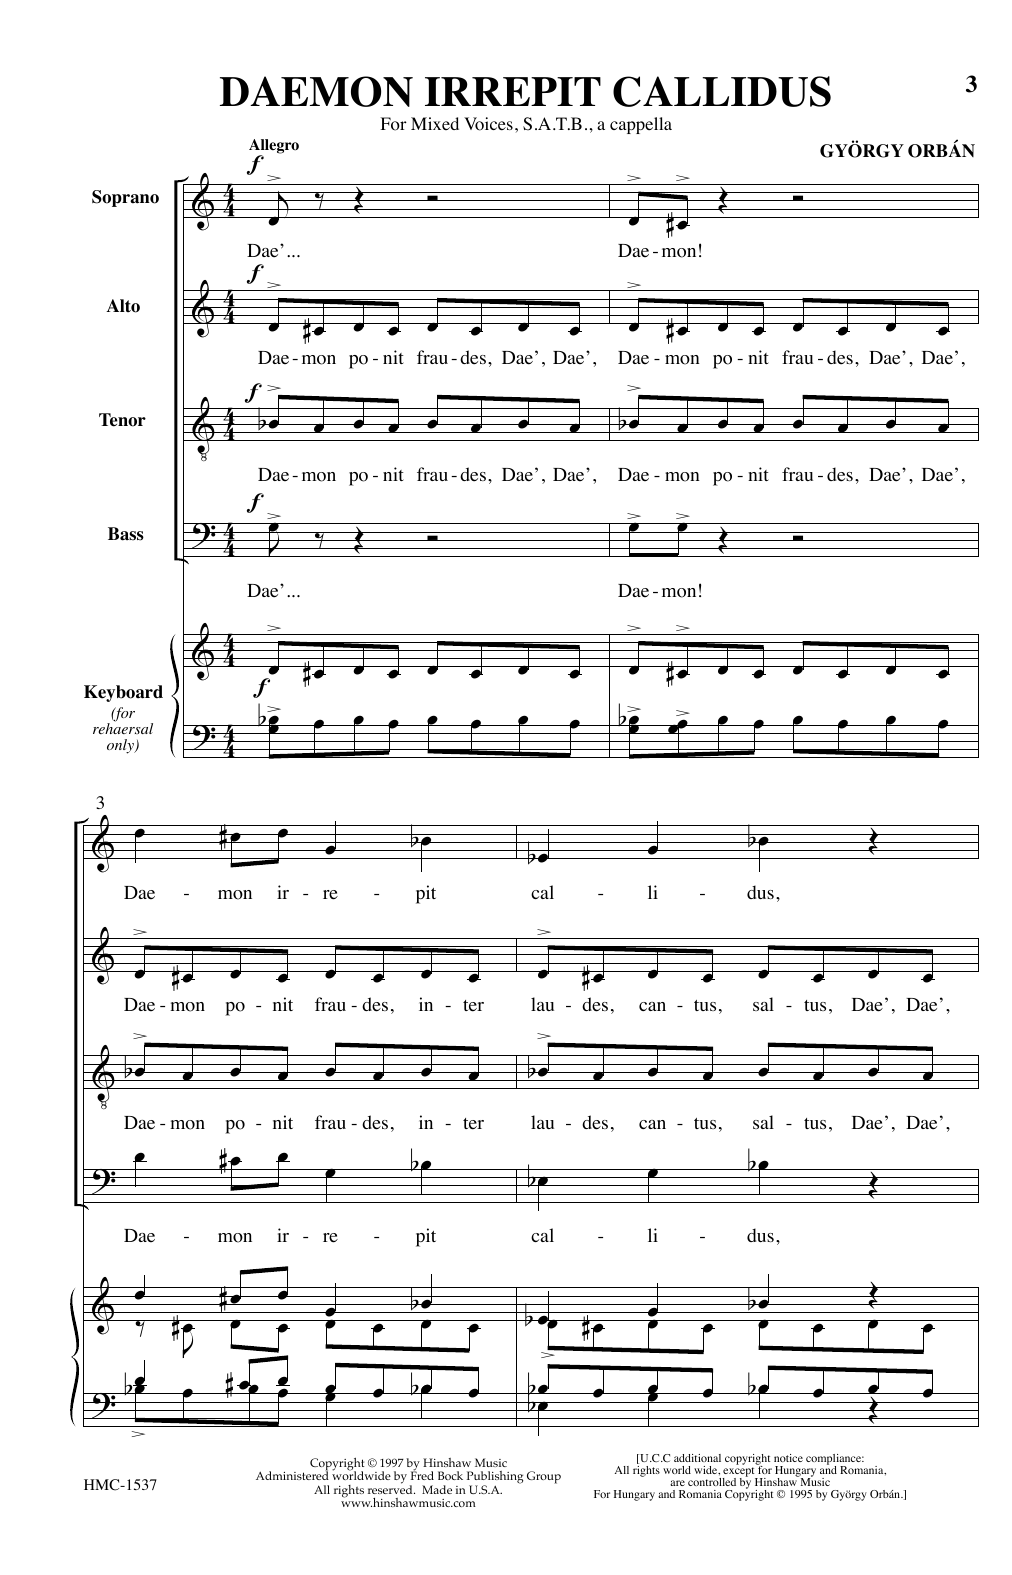 Gyorgy Orban Daemon Irrepit Callidus Sheet Music Notes & Chords for SATB Choir - Download or Print PDF